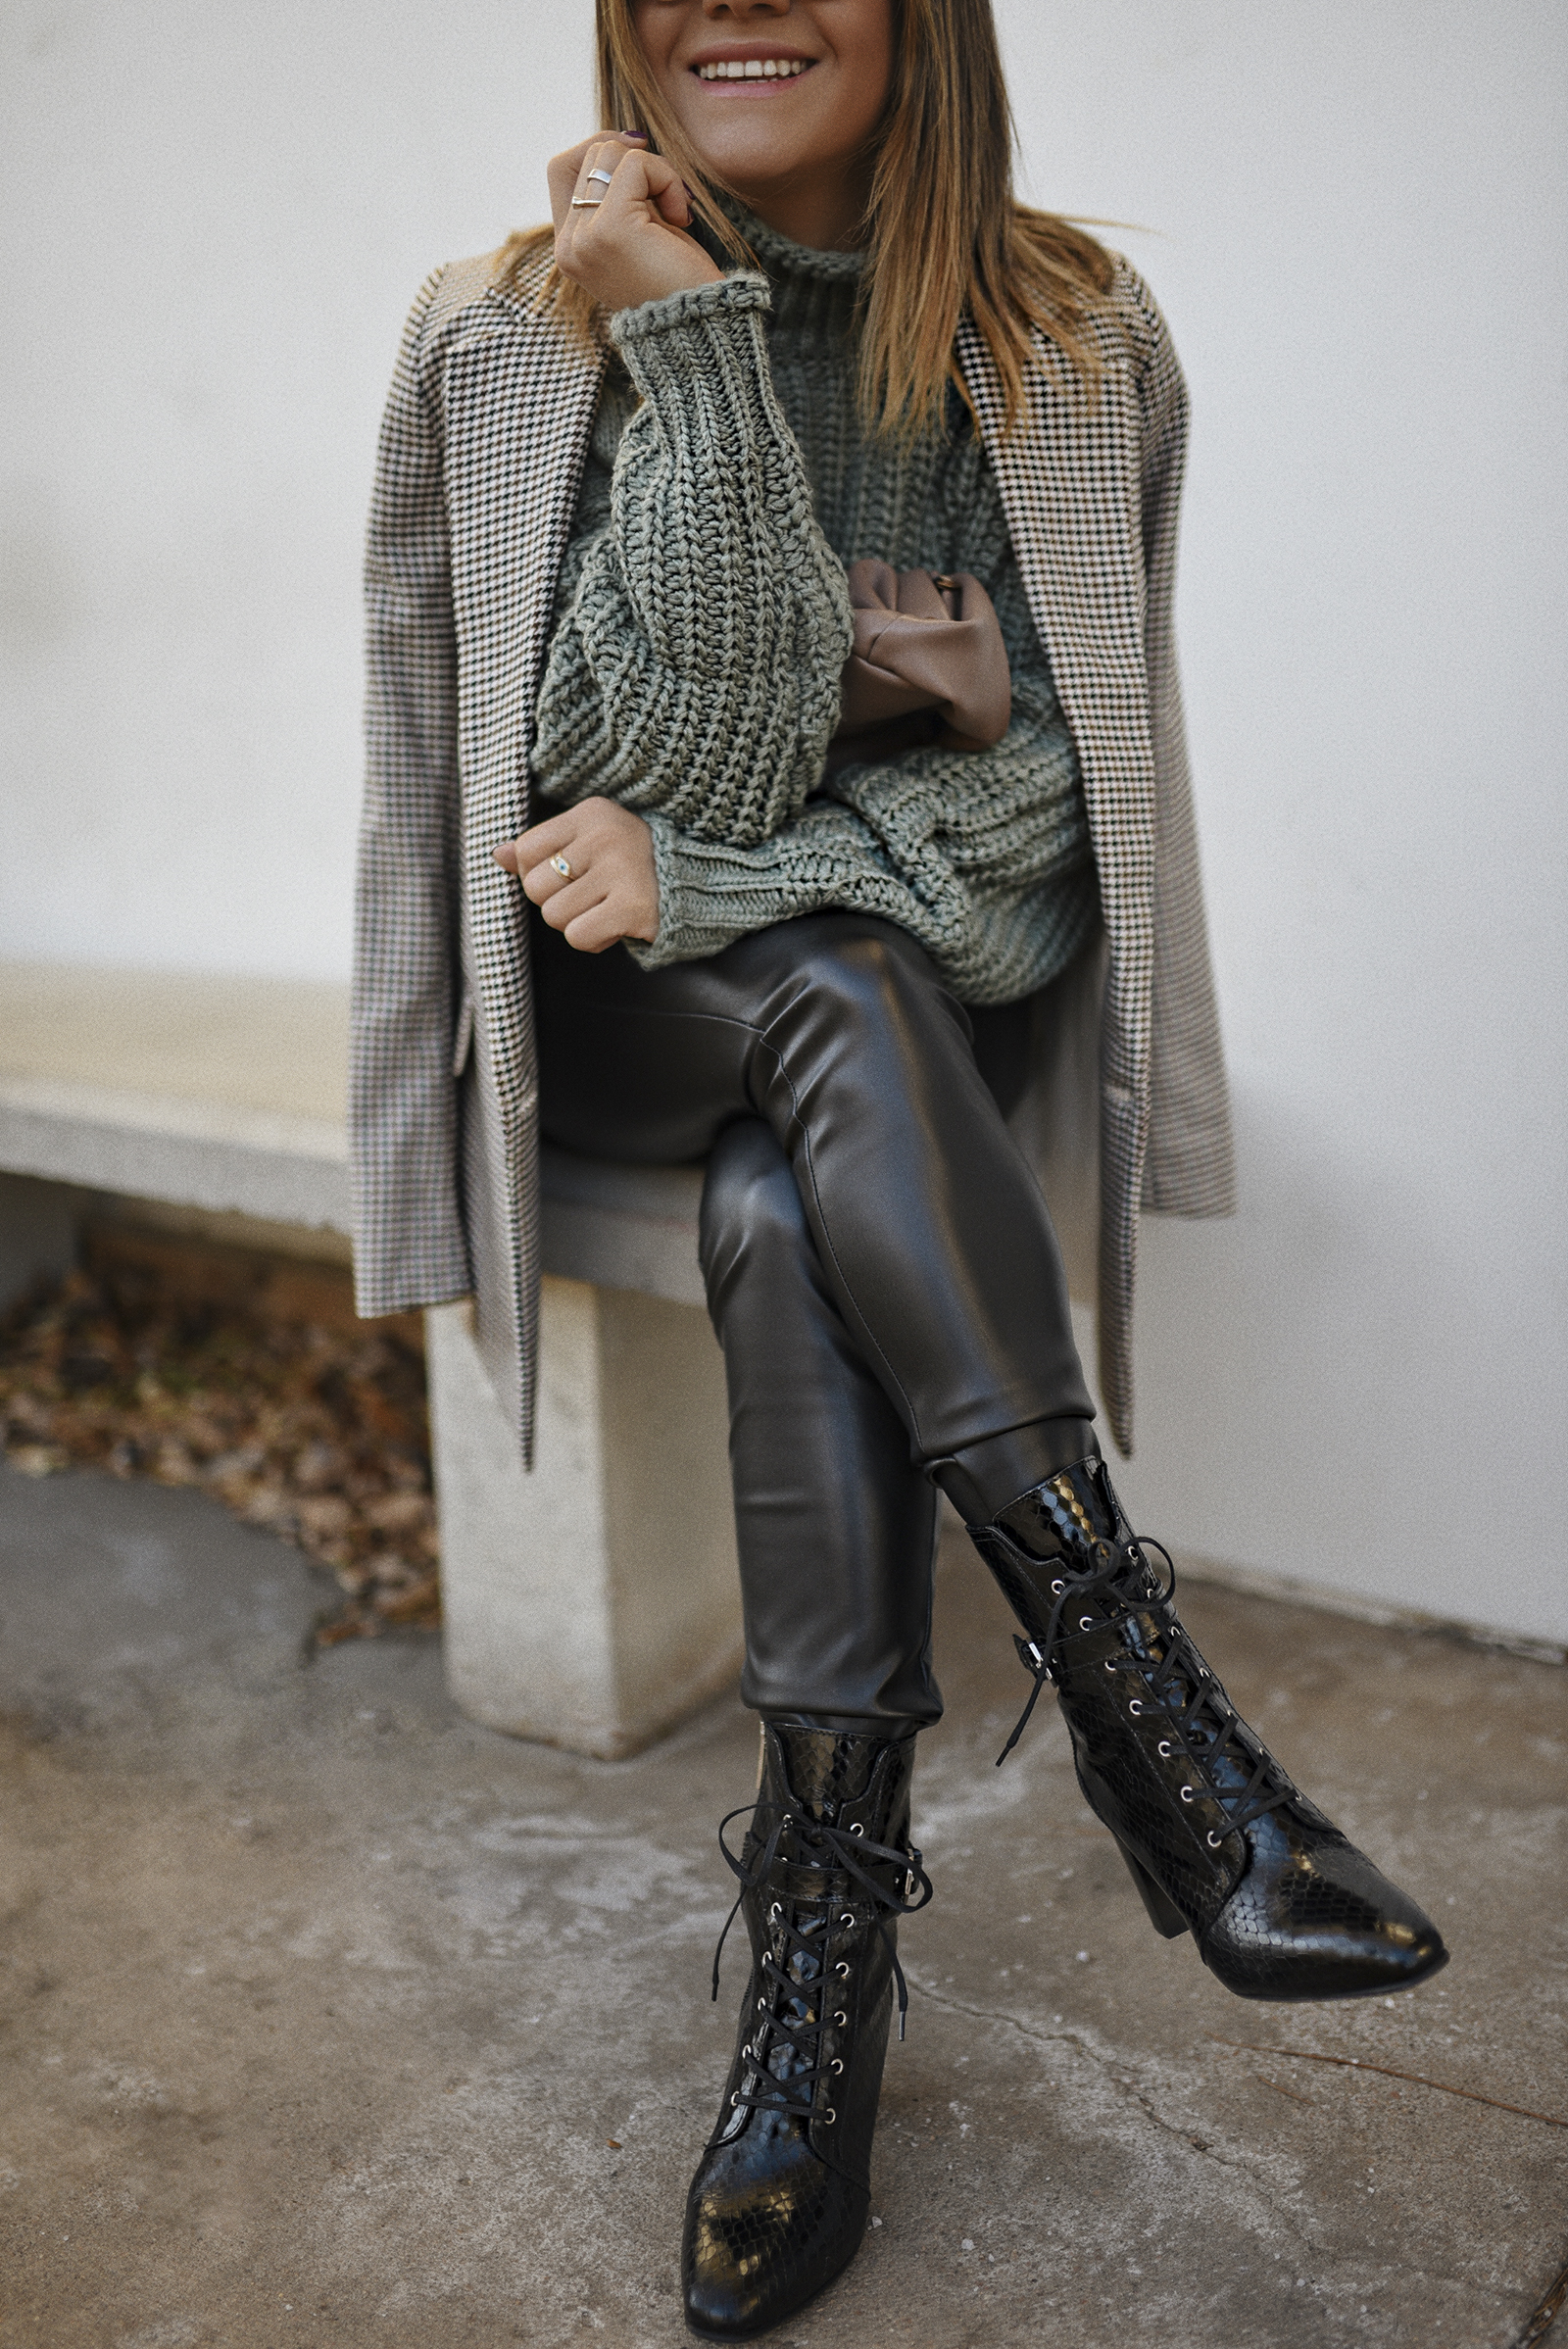 Carolina Hellal of Chic Talk wearing an H&M knit sweater, plaid blazer, Sofia Jeans vegan leather pants and Aquatalia lace up boots.